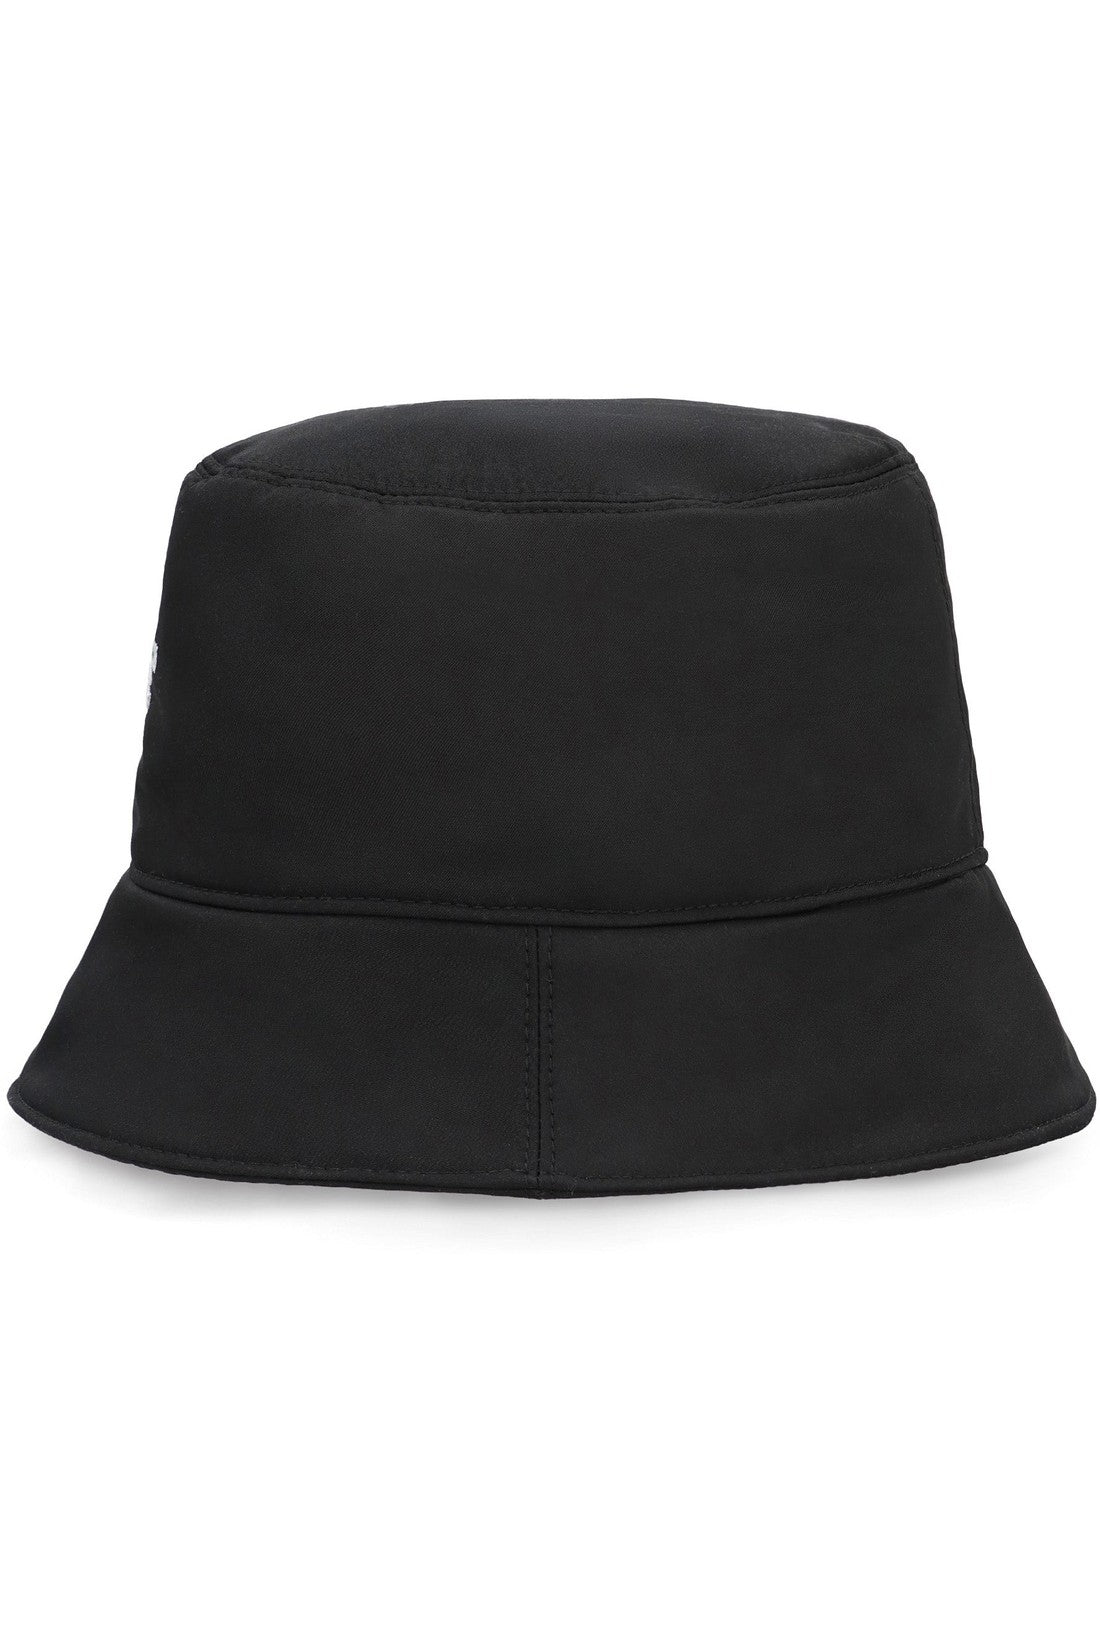 Off-White-OUTLET-SALE-Bucket hat-ARCHIVIST